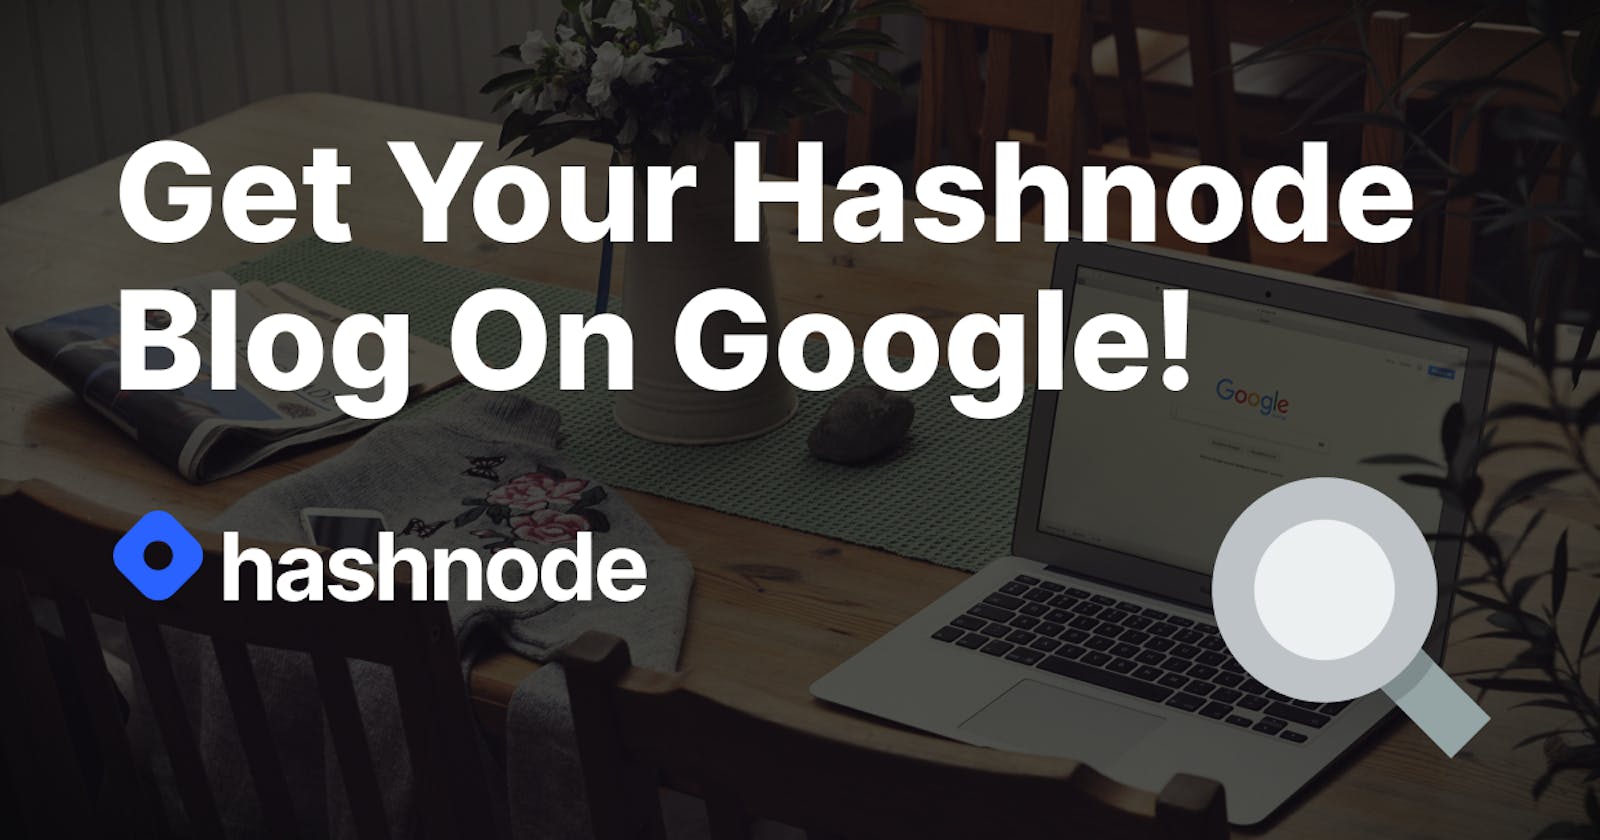 Get Your Hashnode Blog On Google!